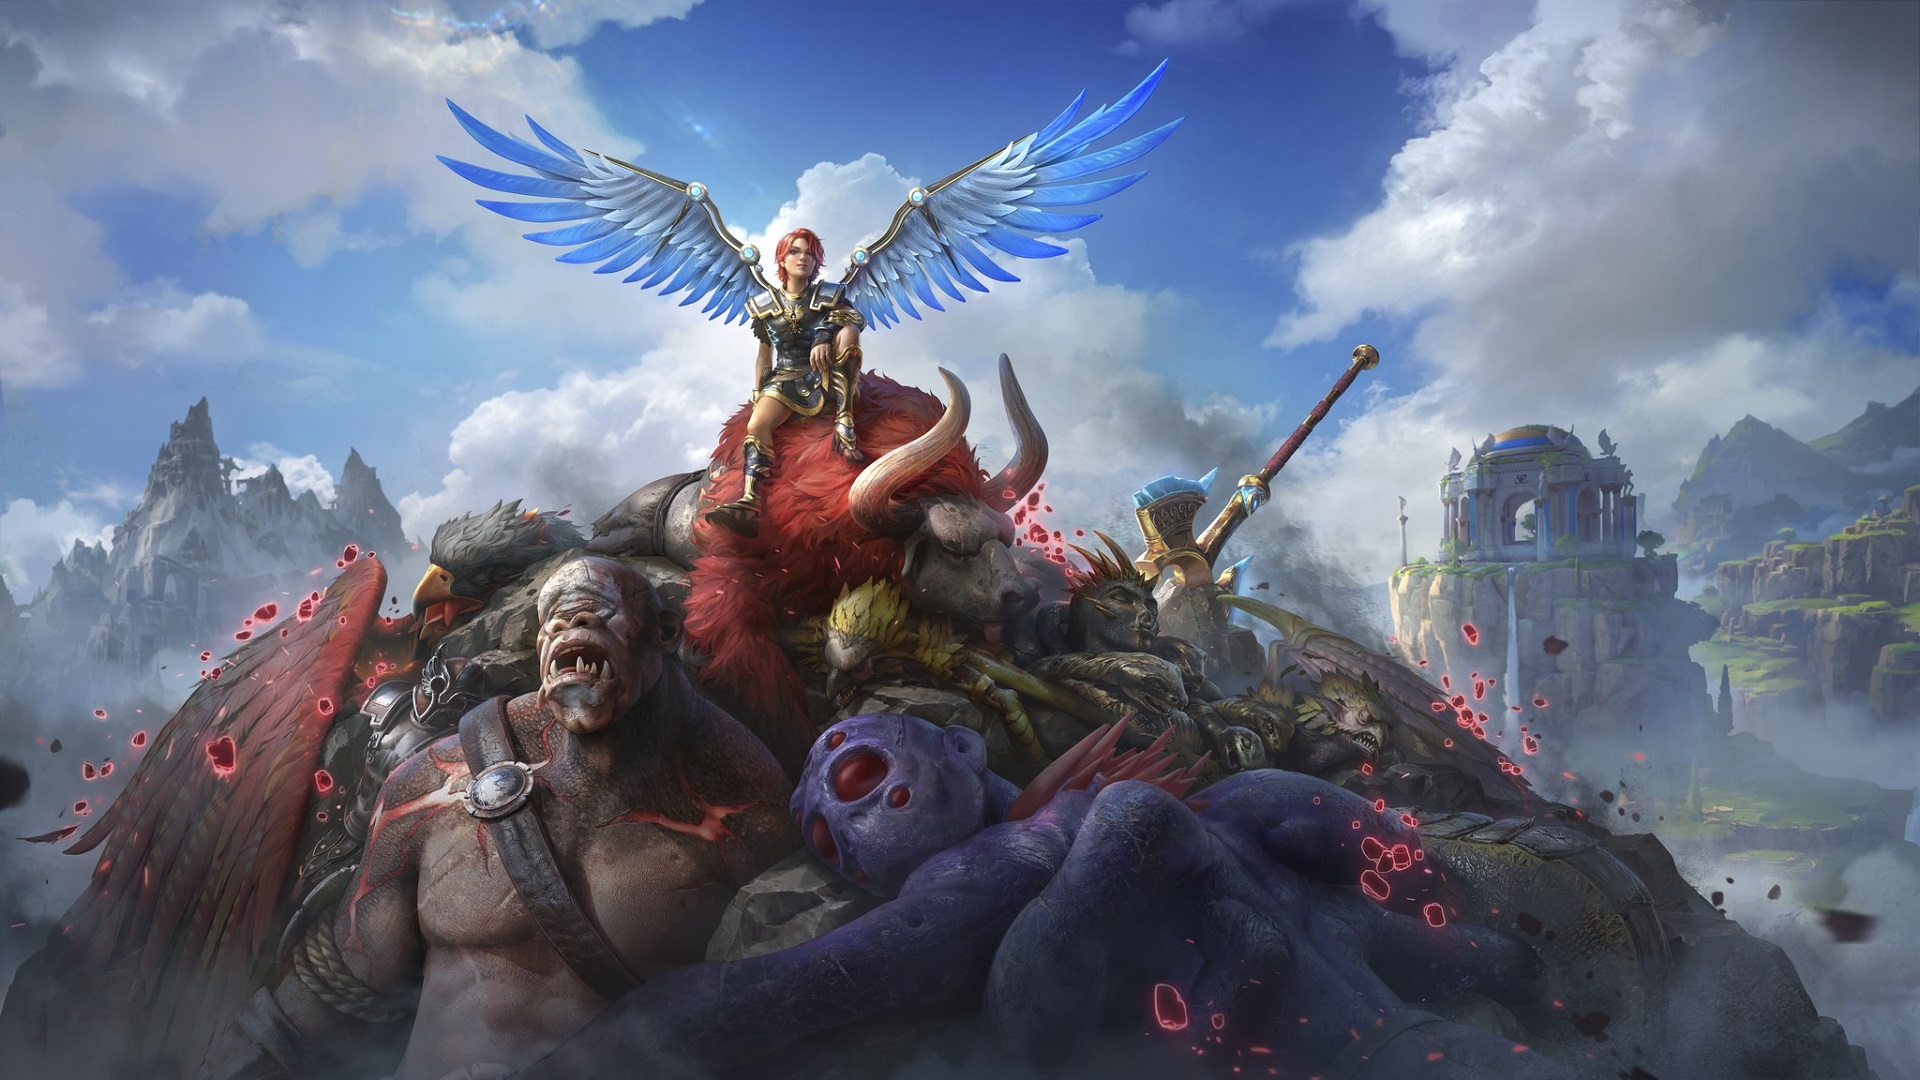 Immortals: Fenyx Rising: The Kotaku Review